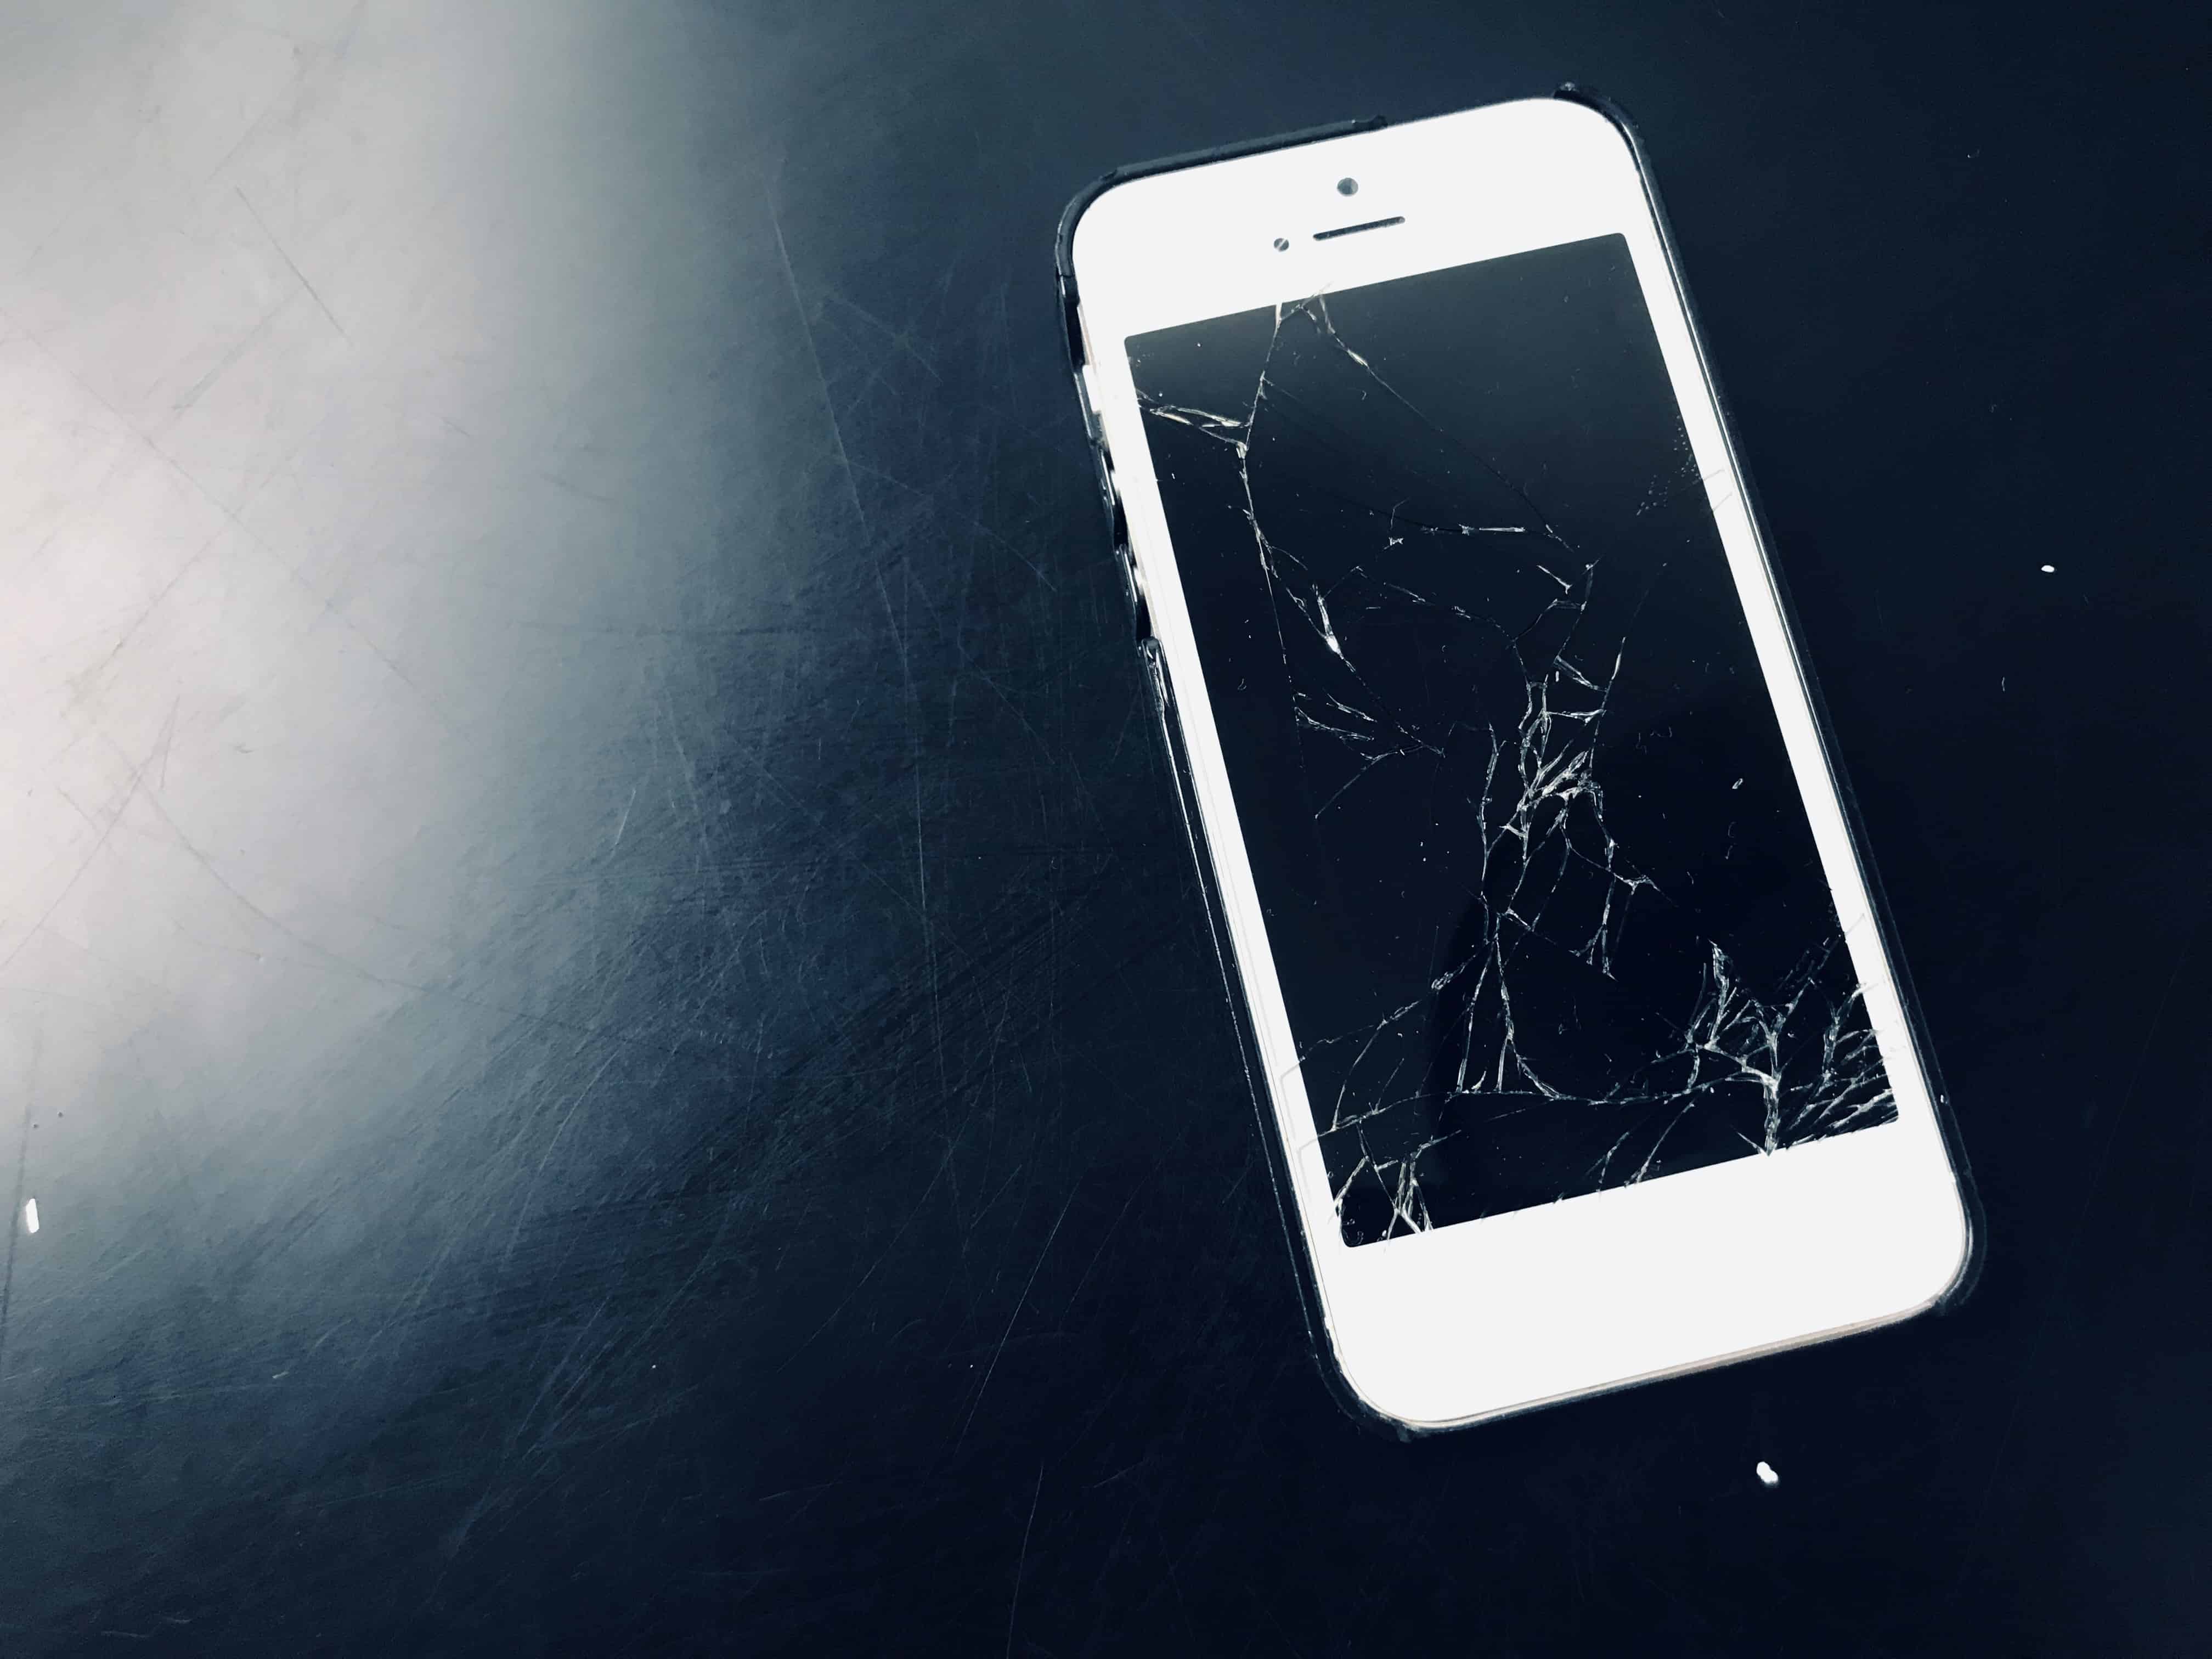 Your Iphone When The Screen Is Broken, How To Mirror Iphone With Broken Screen Laptop